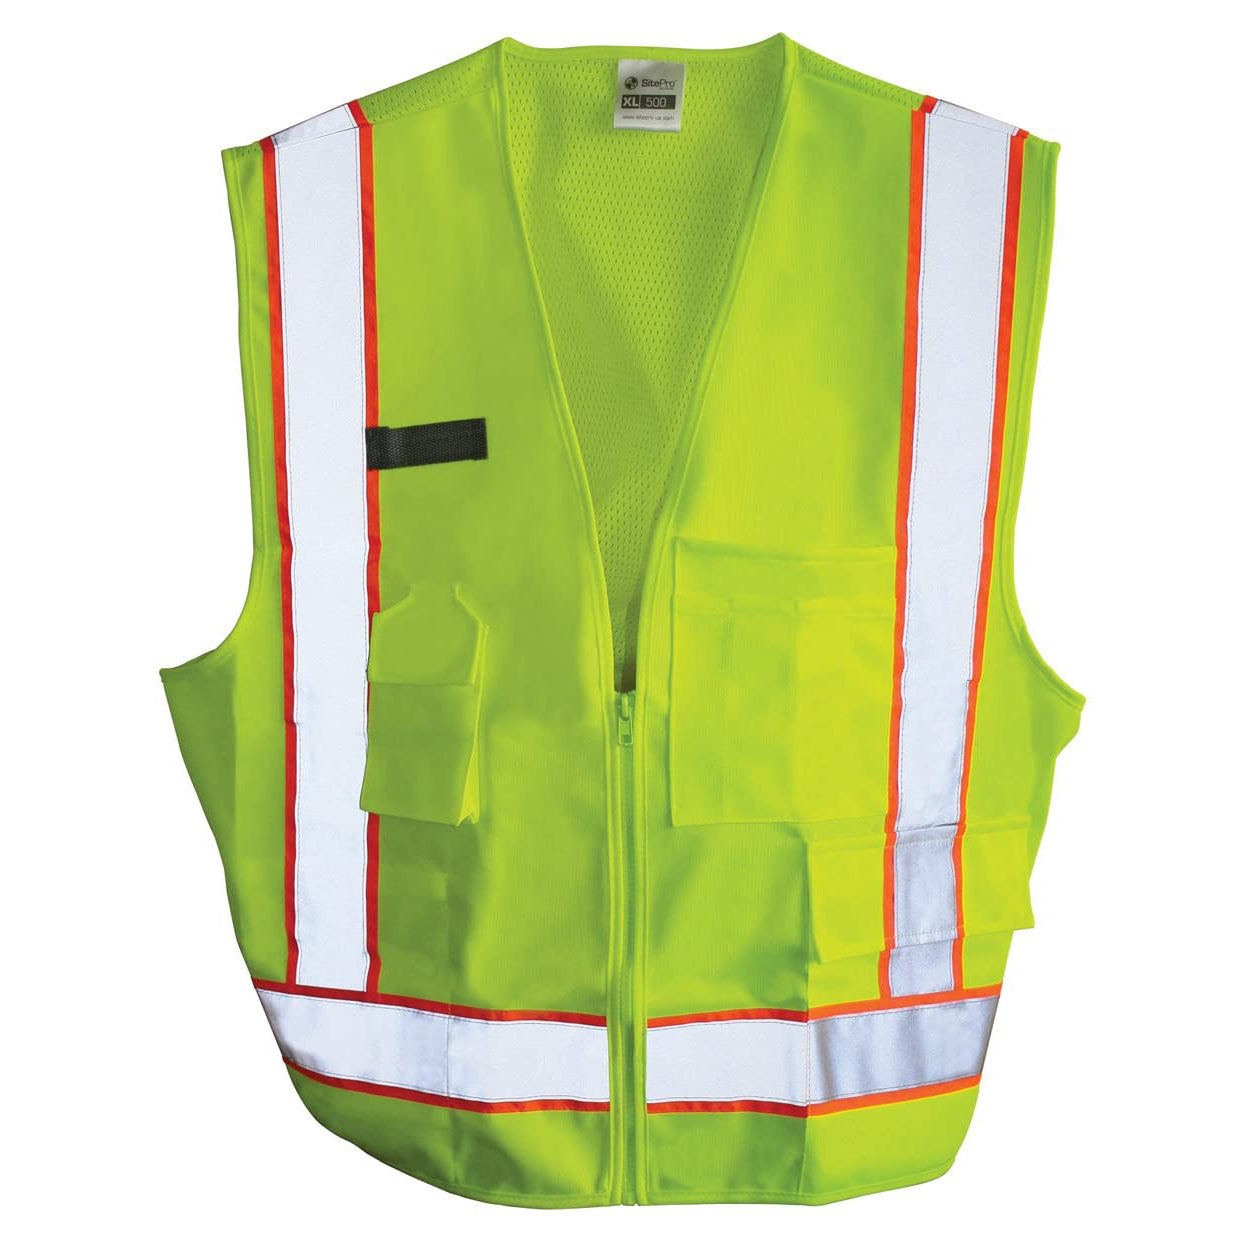 Construction Safety Vest, HI VIZ – Lime, Class 2